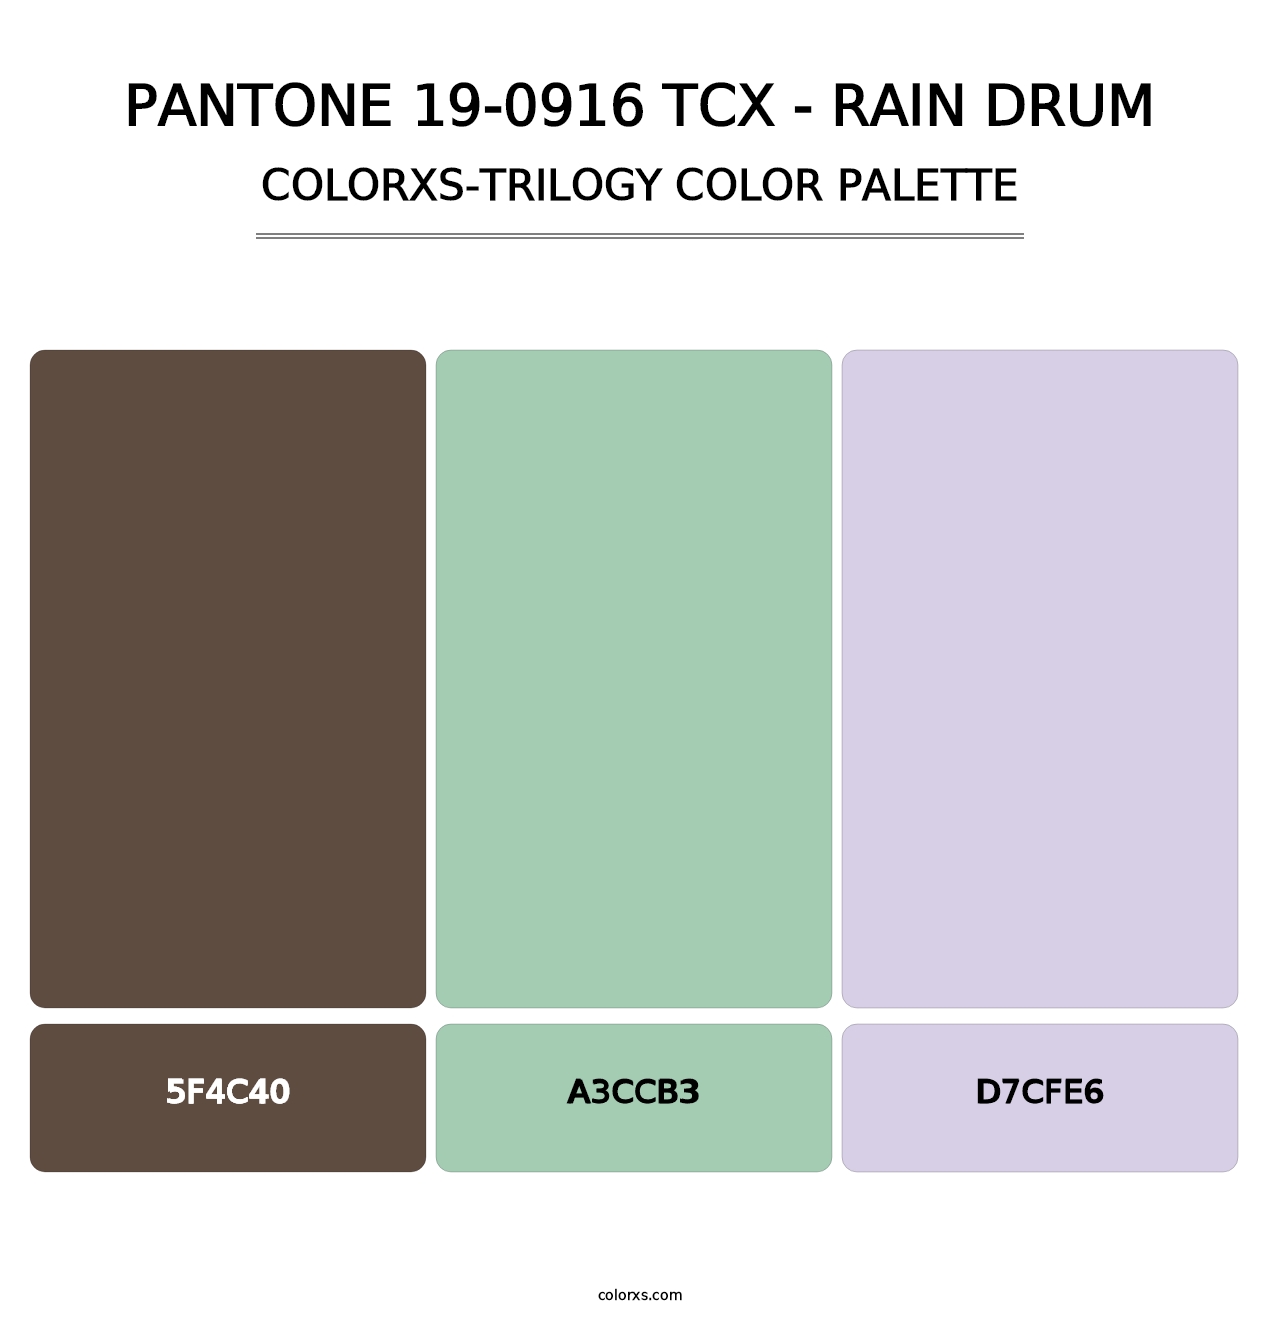 PANTONE 19-0916 TCX - Rain Drum - Colorxs Trilogy Palette